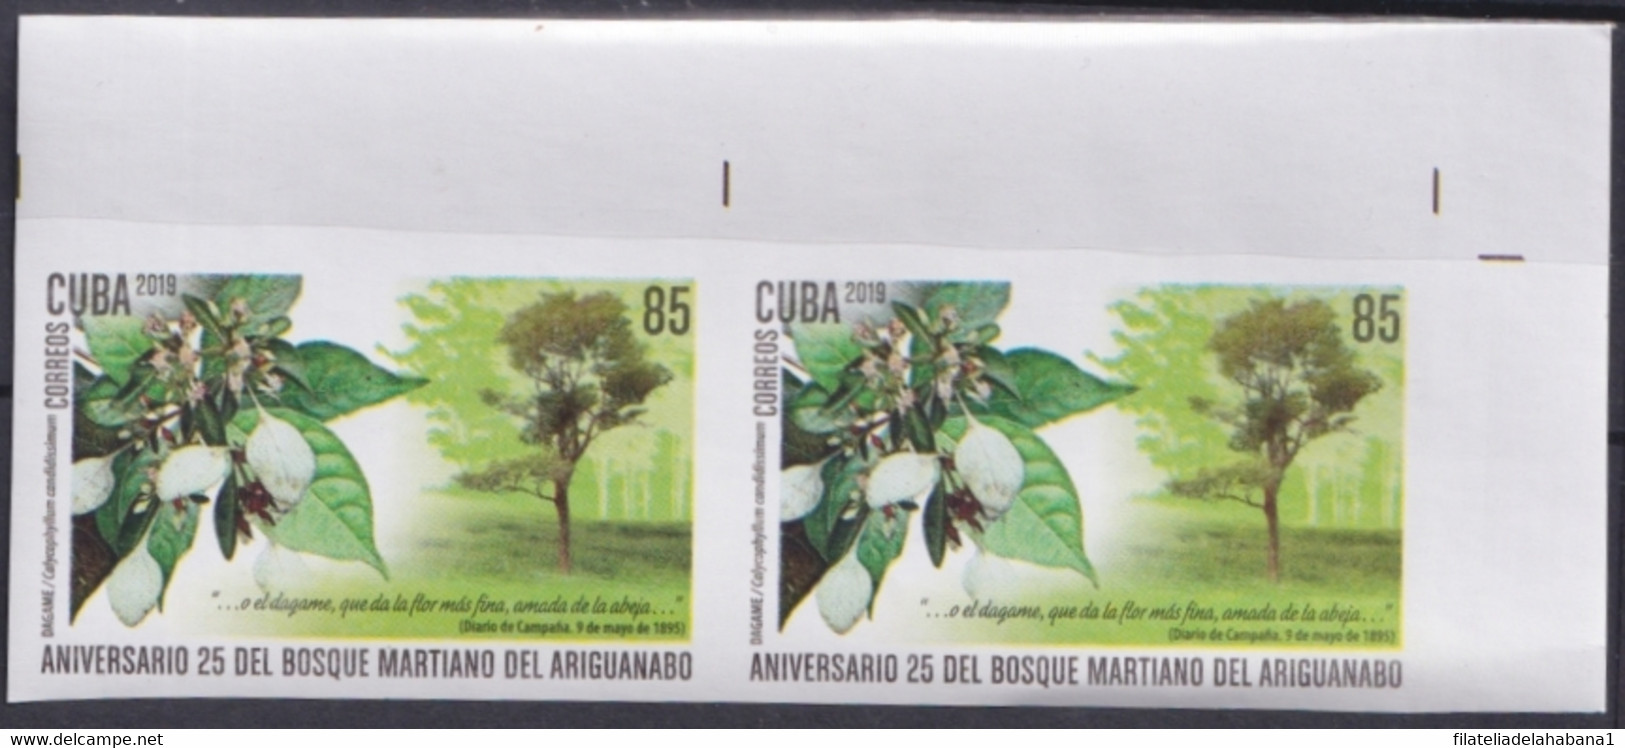 2019.208 CUBA MNH 2019 IMPERFORATED PROOF 85c MARTI TREE ARIGUANABO DAGAME. - Non Dentelés, épreuves & Variétés